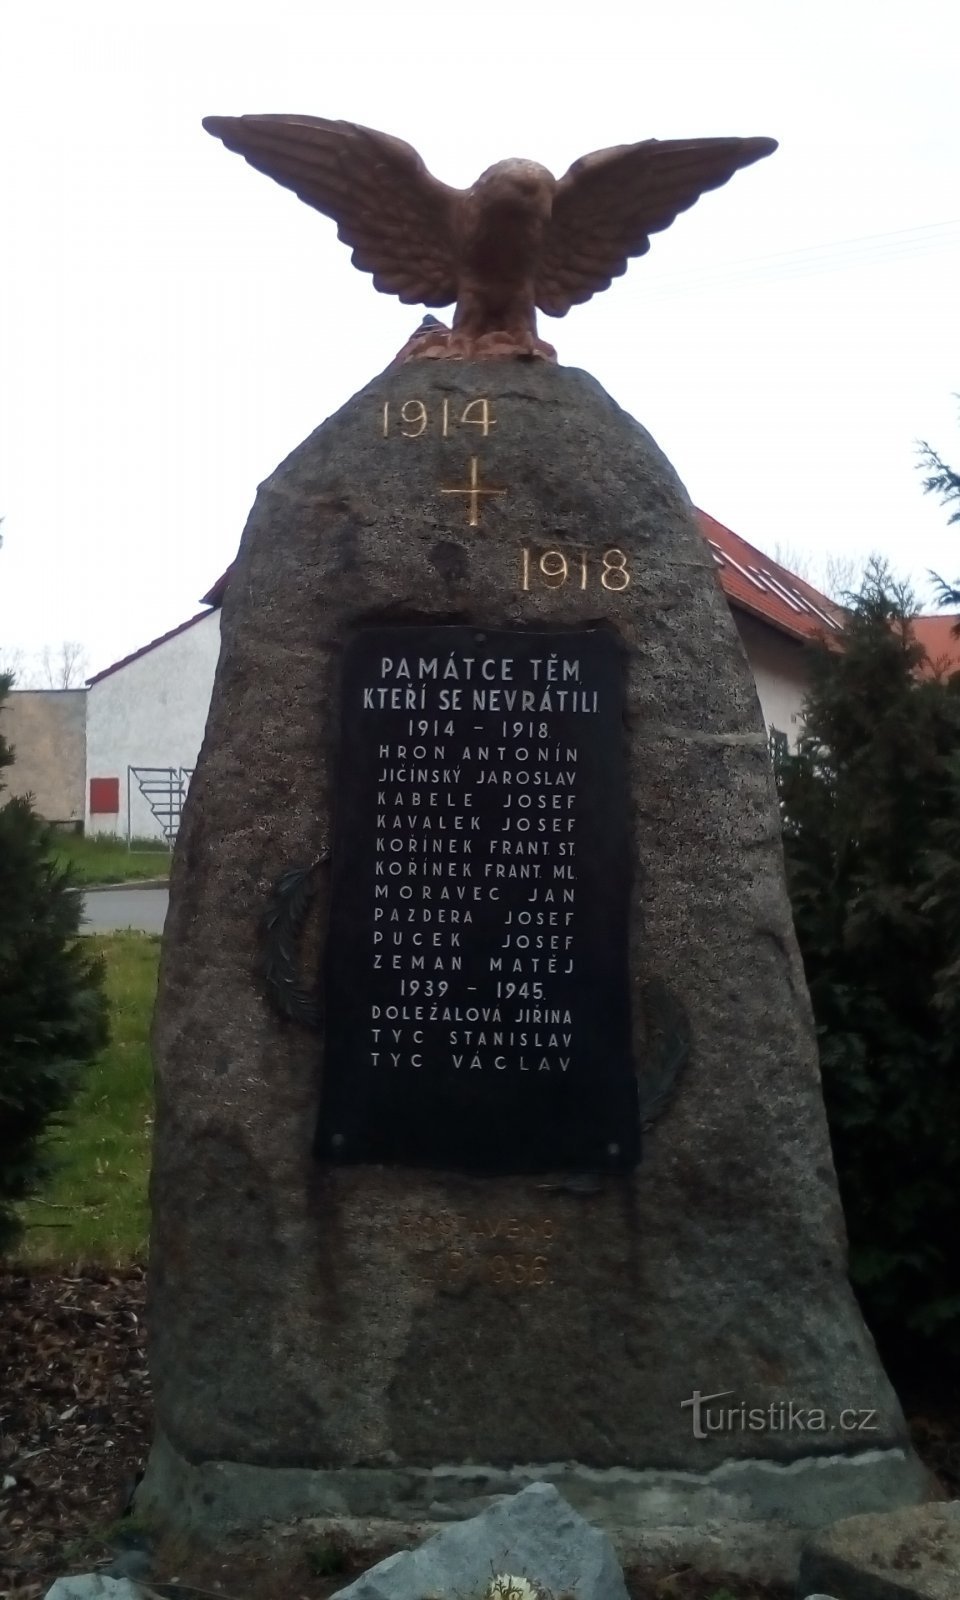 Spomenik palima u Dražkovicama